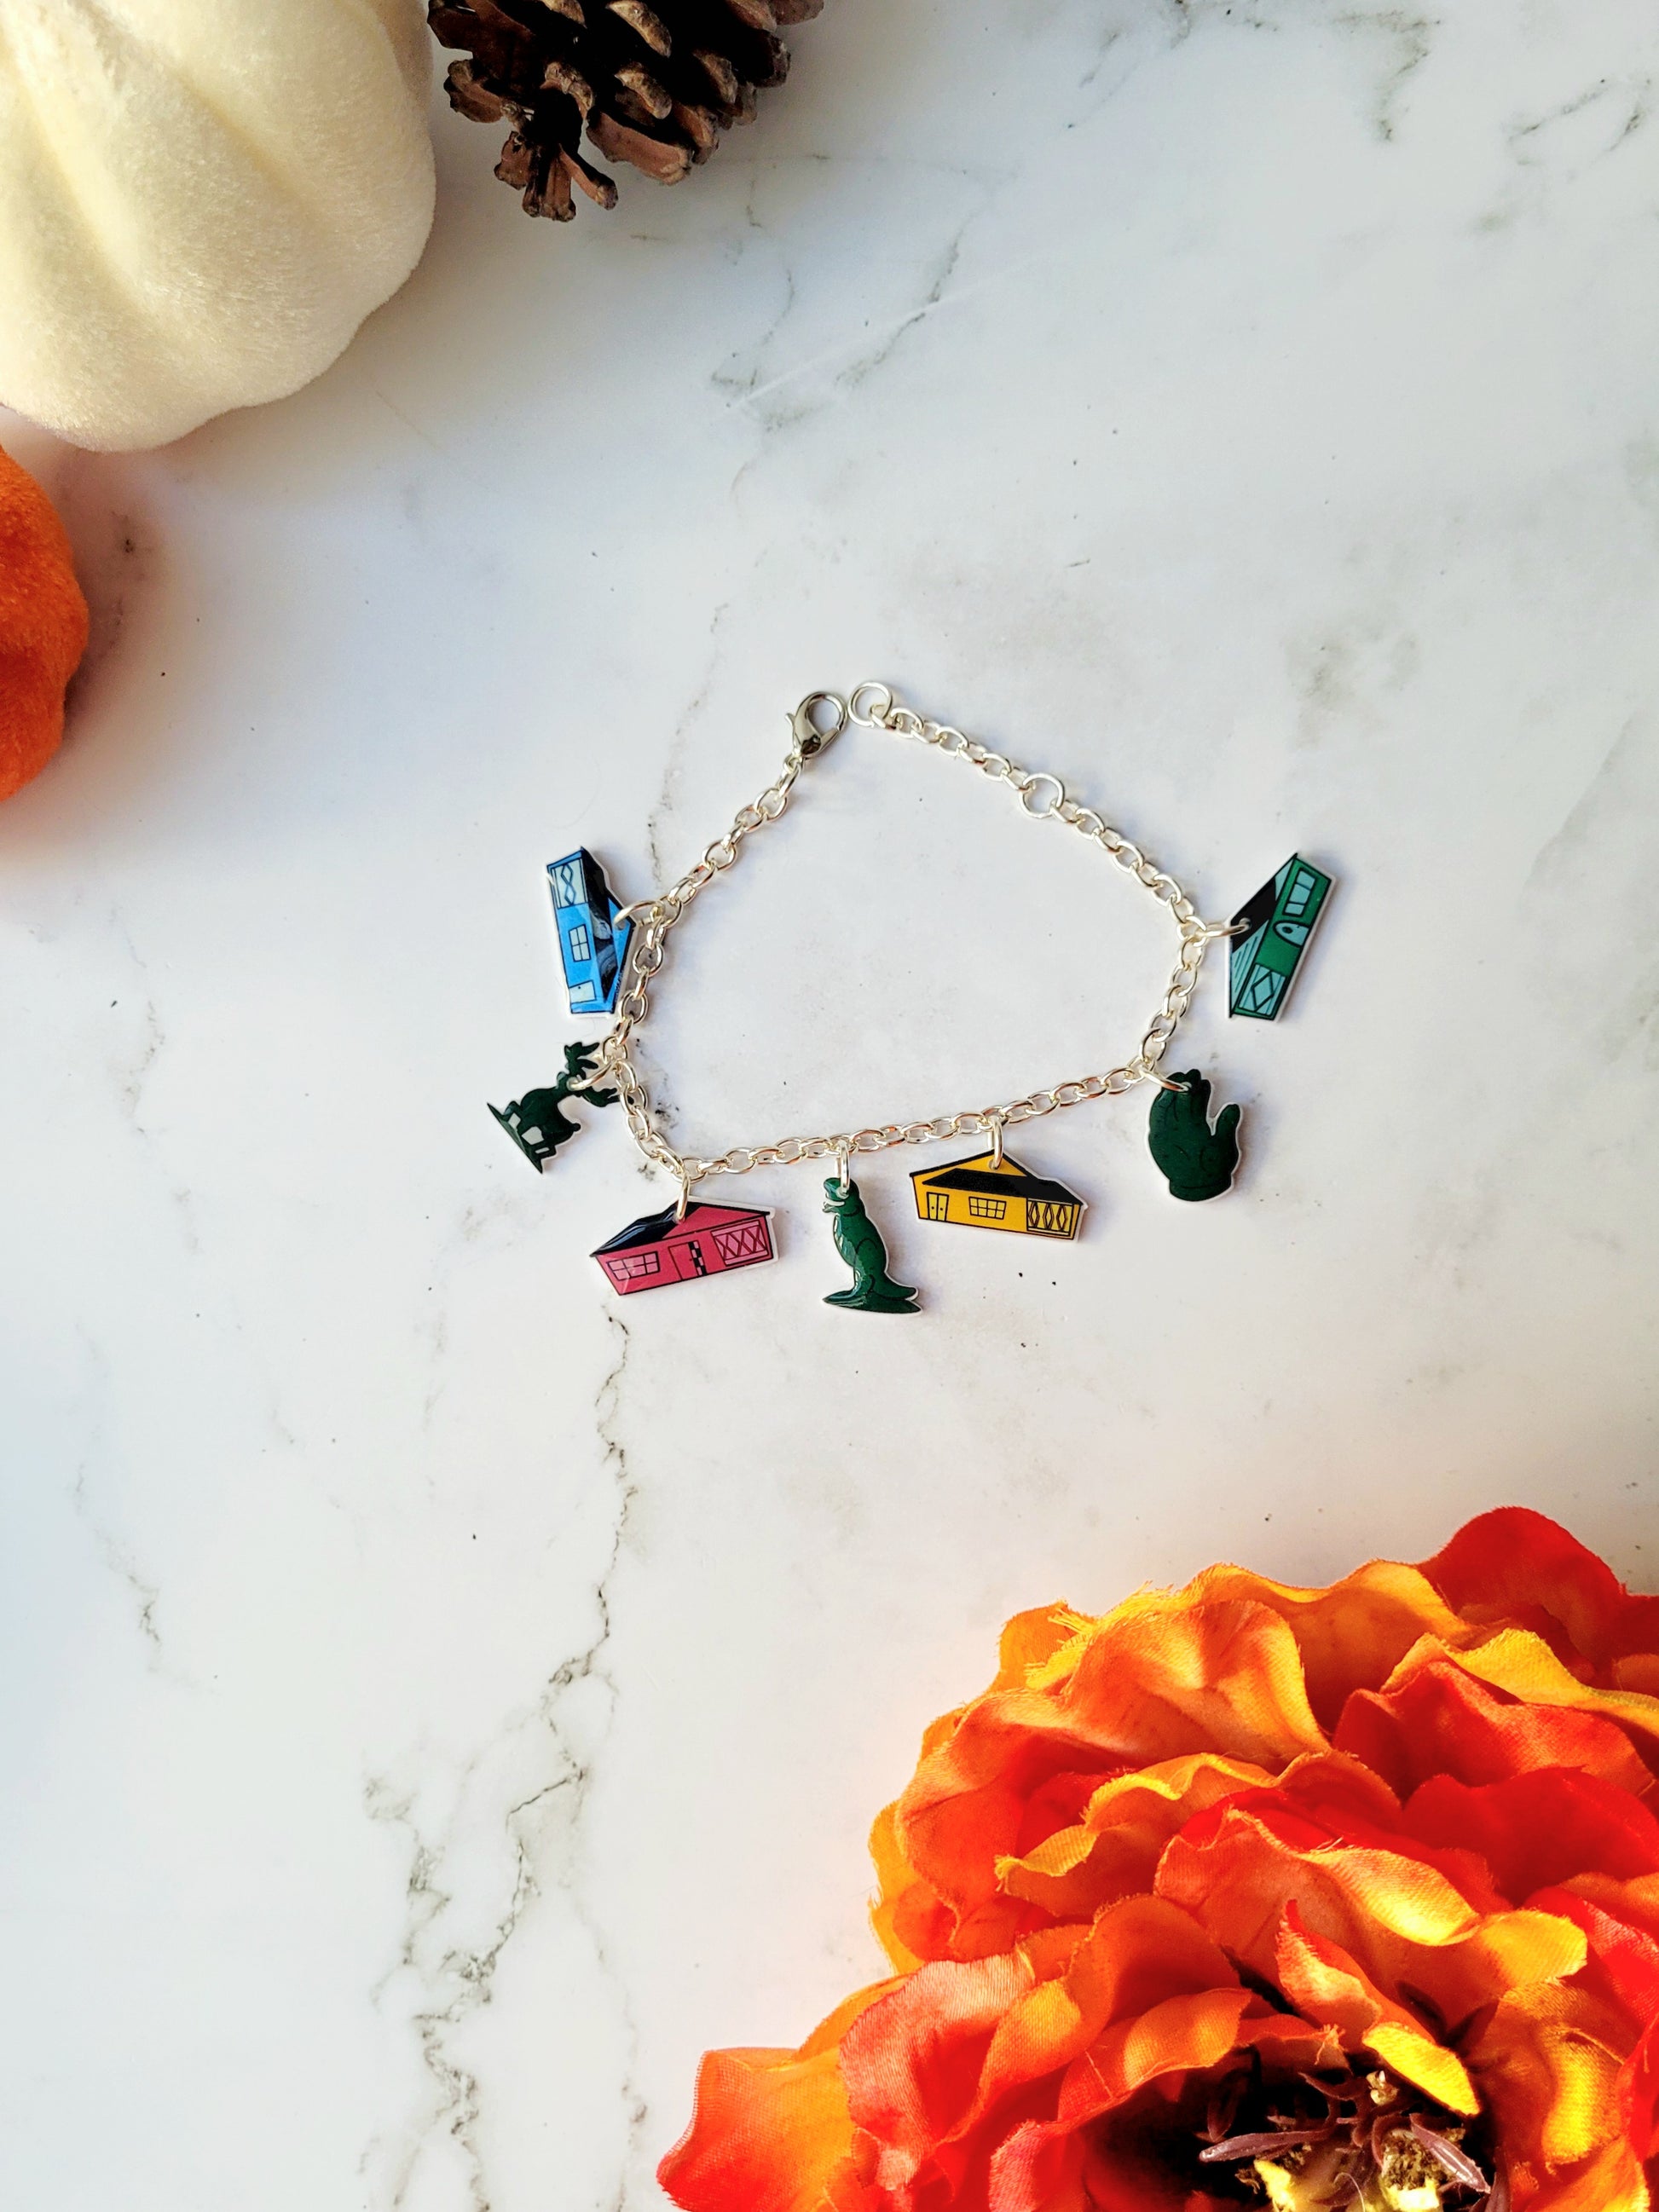 Edward Scissorhands themed charm bracelet on a marble background.  